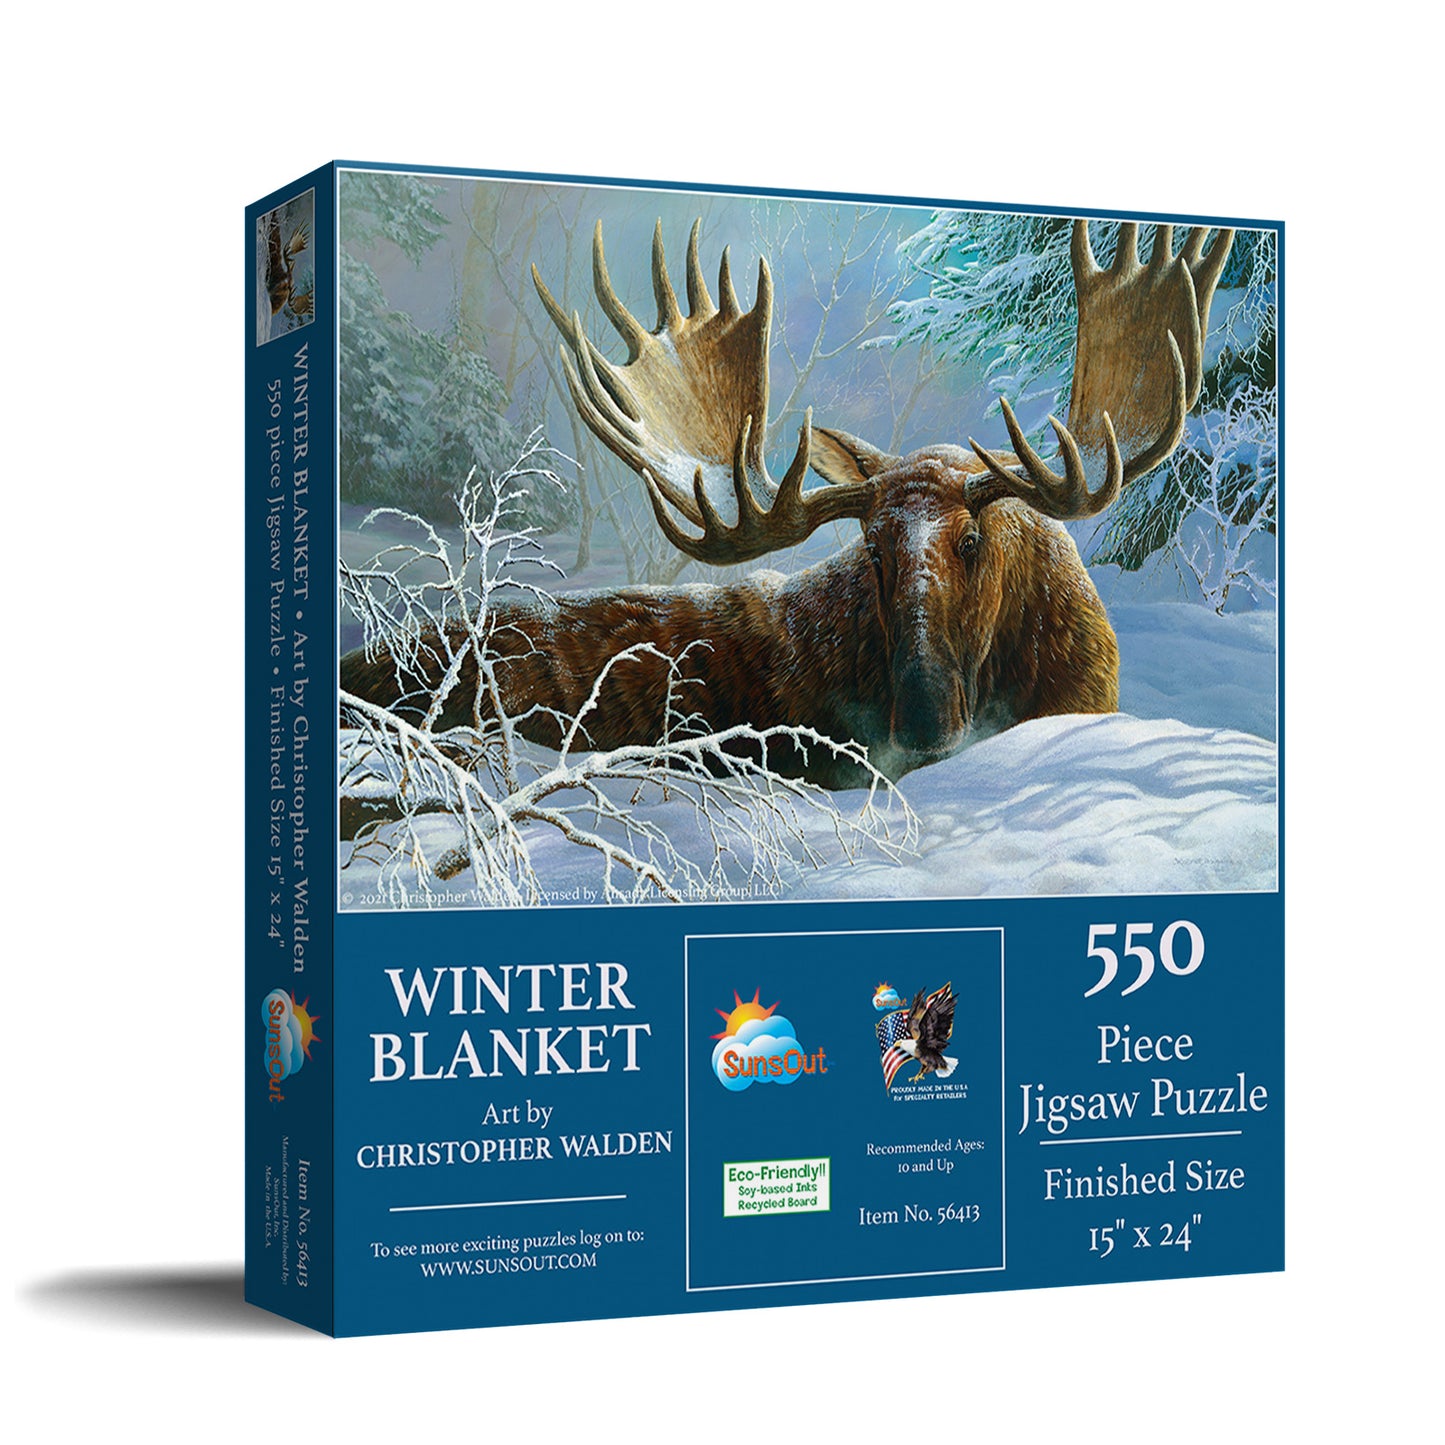 Winter Blanket - 550 Piece Jigsaw Puzzle